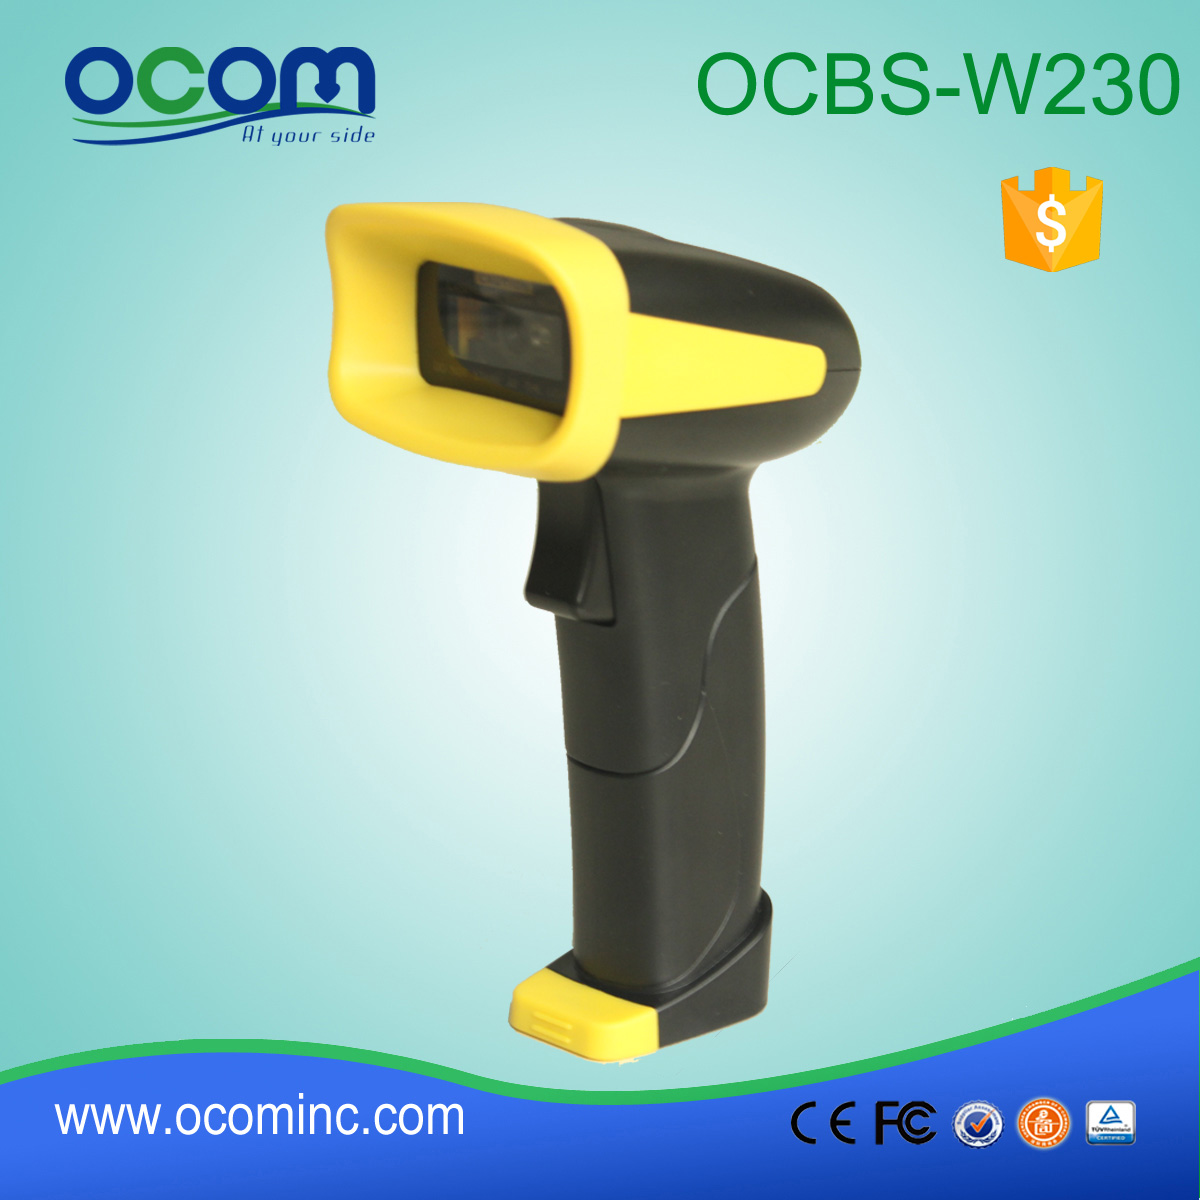 OCBS-W230: High-speed Bluetooth draadloze draagbare 2D barcode scanner